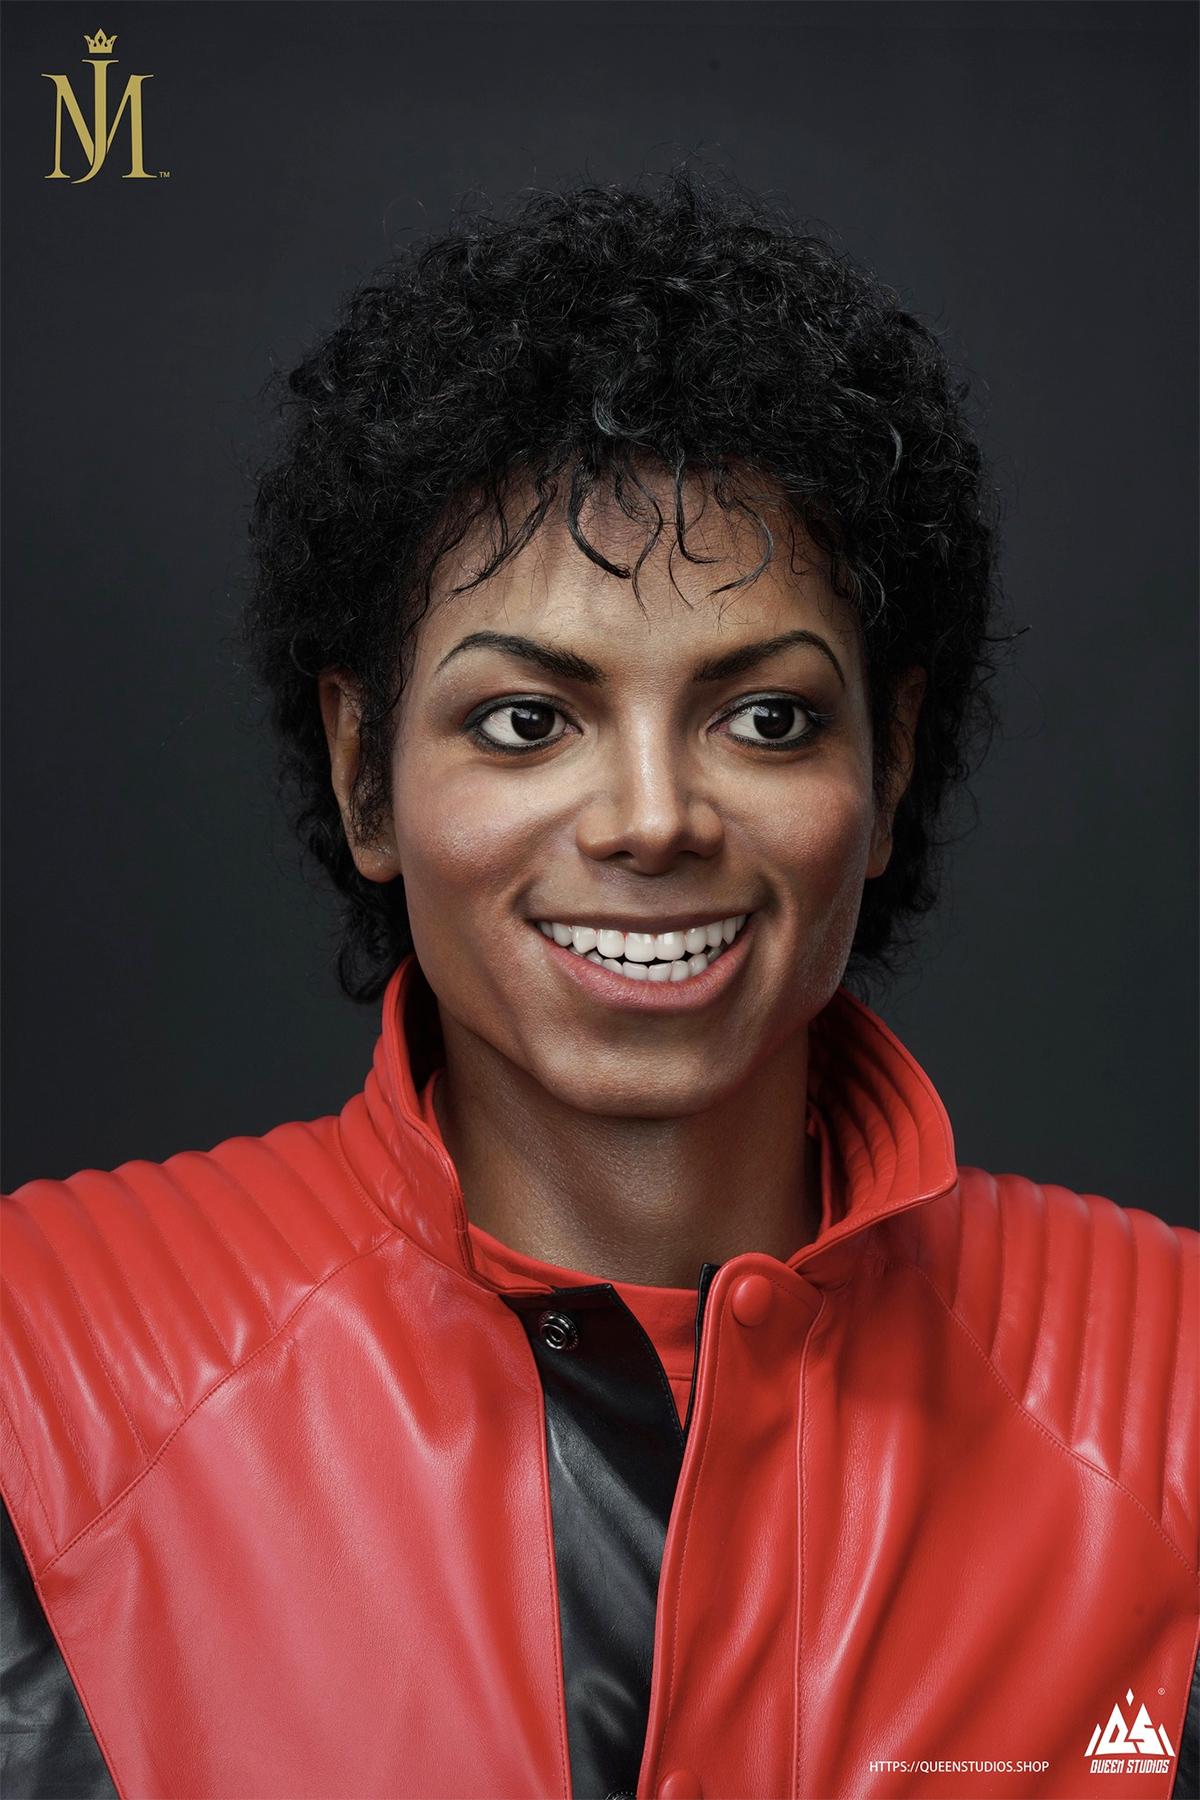 Busto Michael Jackson Thriller em Tamanho Real